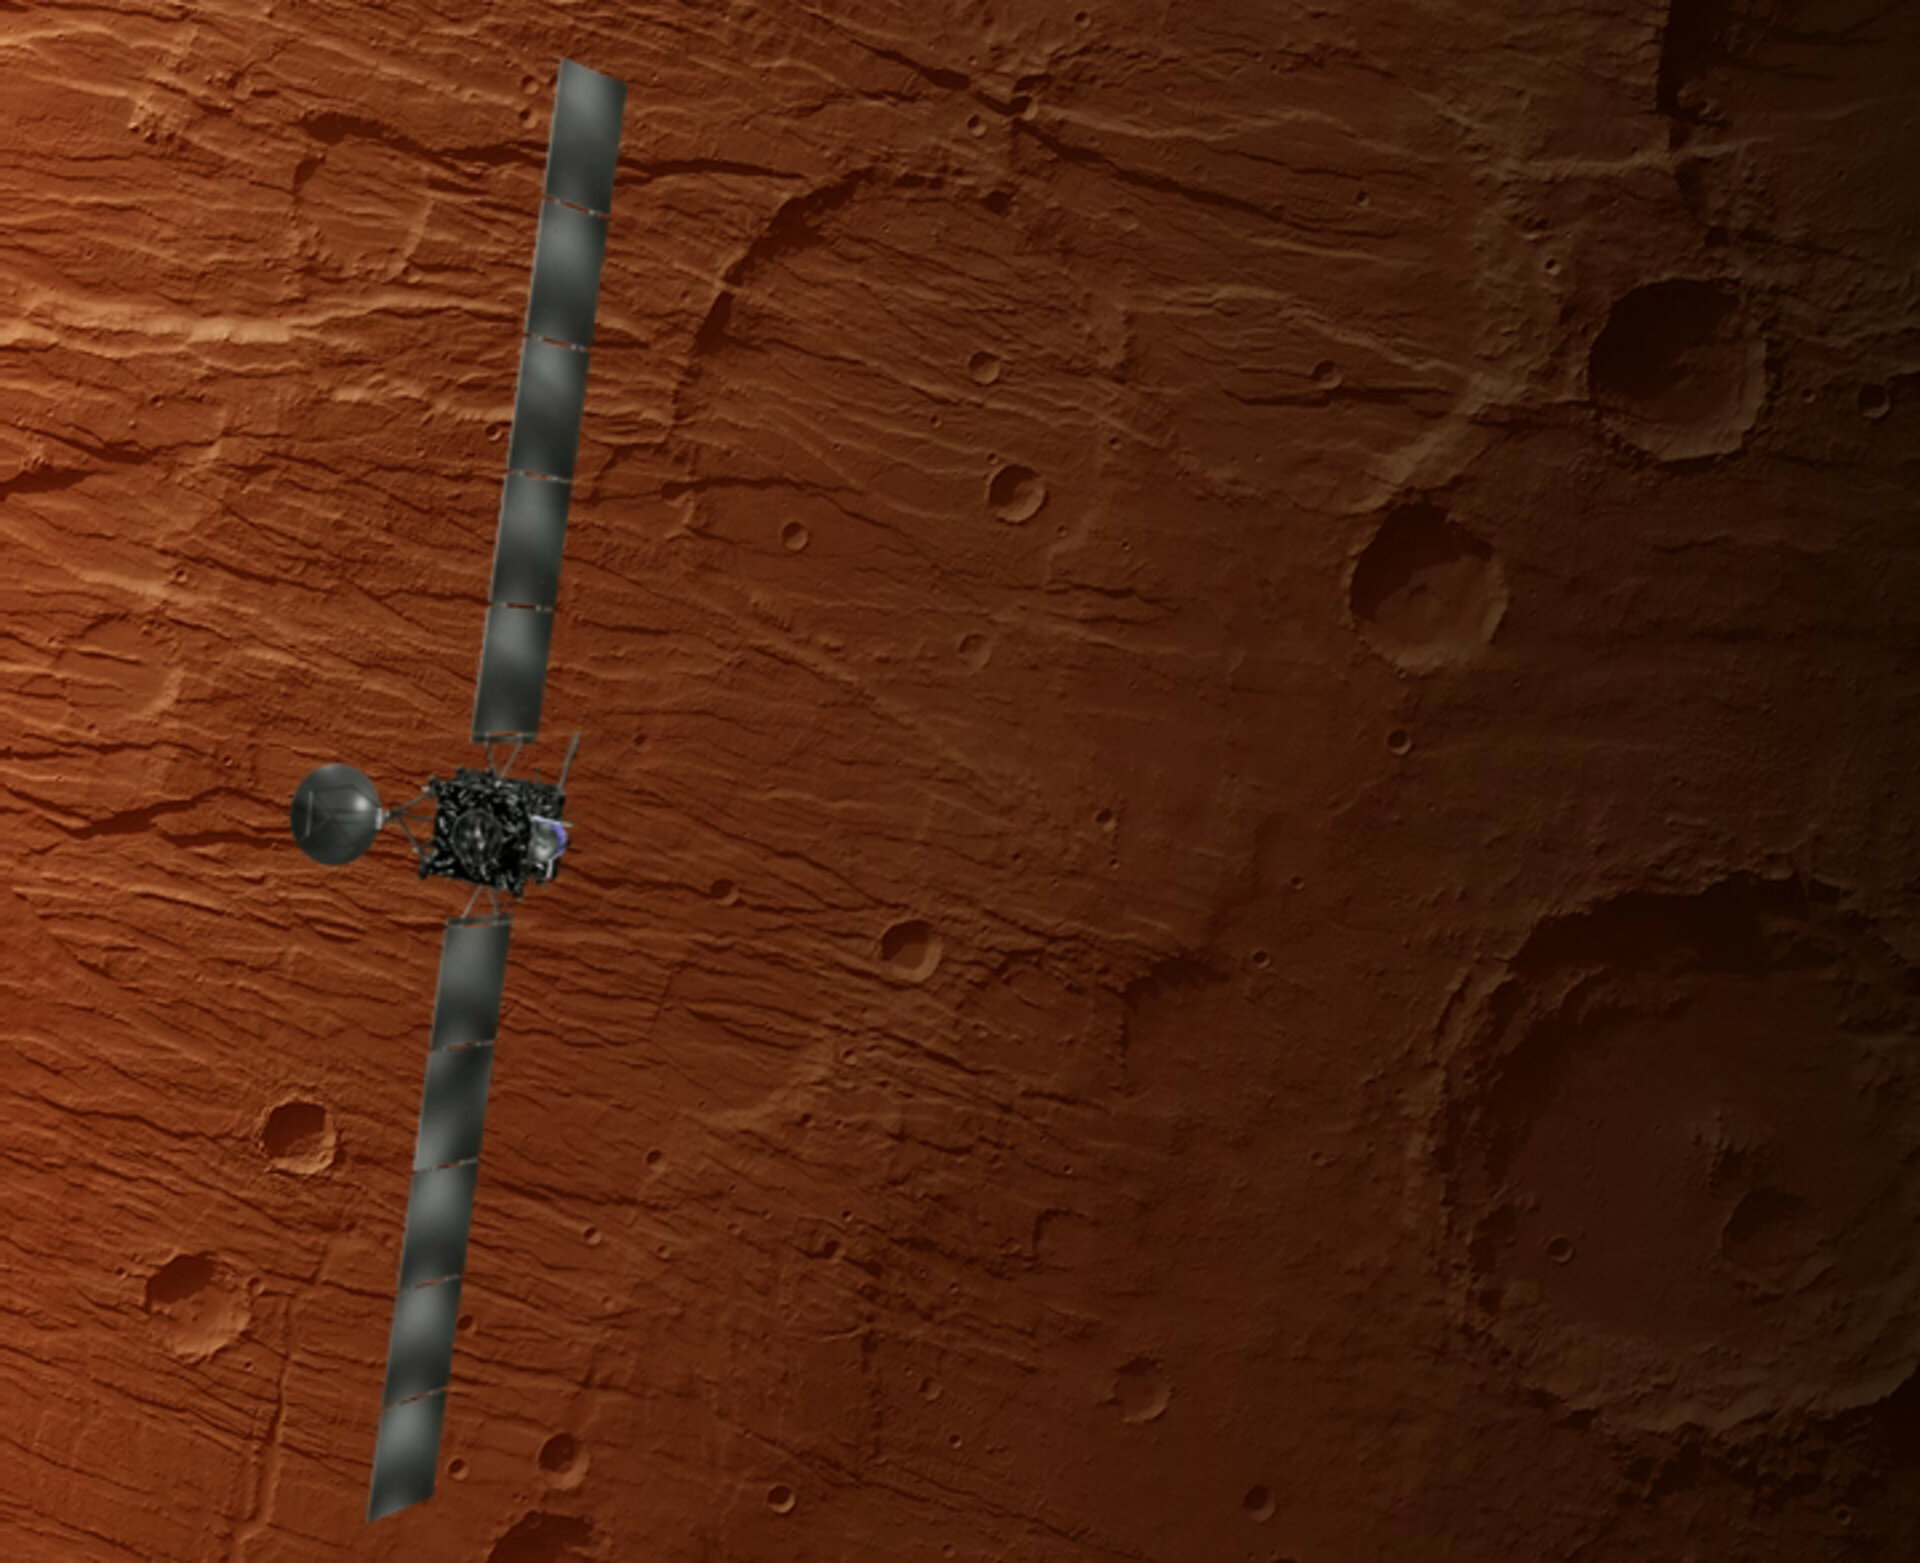 Rosetta swinging by Mars at close distance